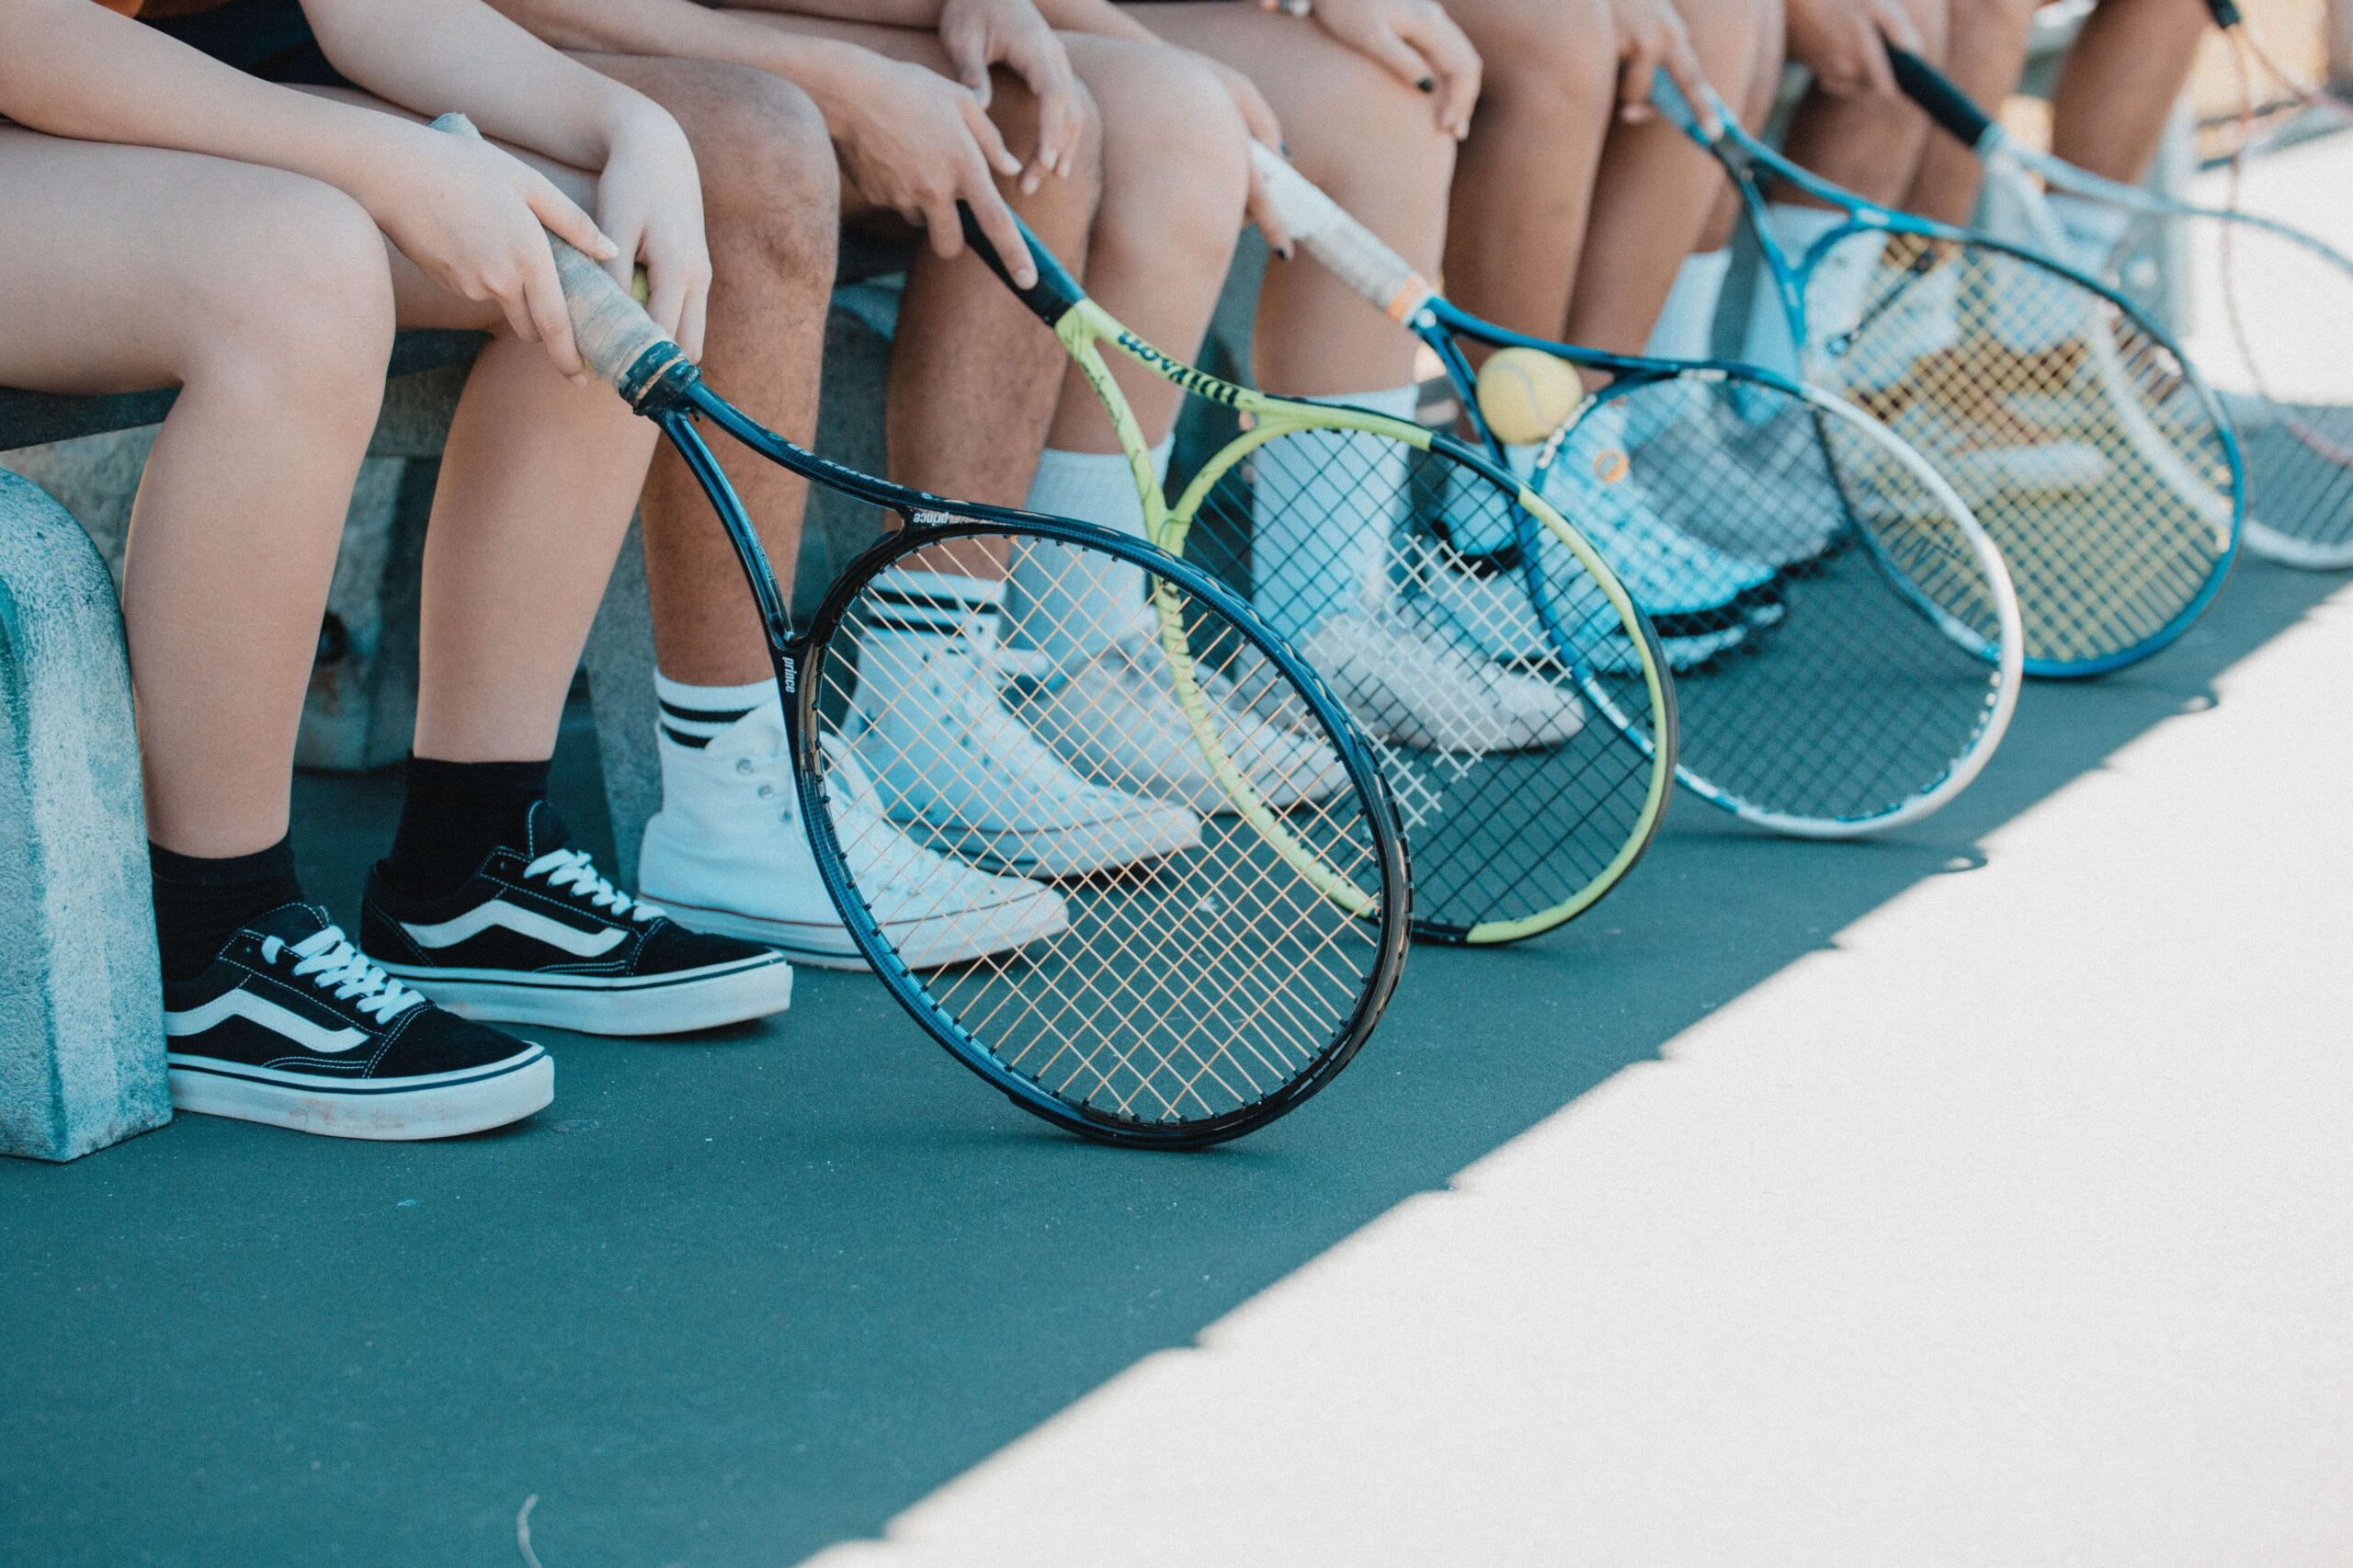 tennis shoes